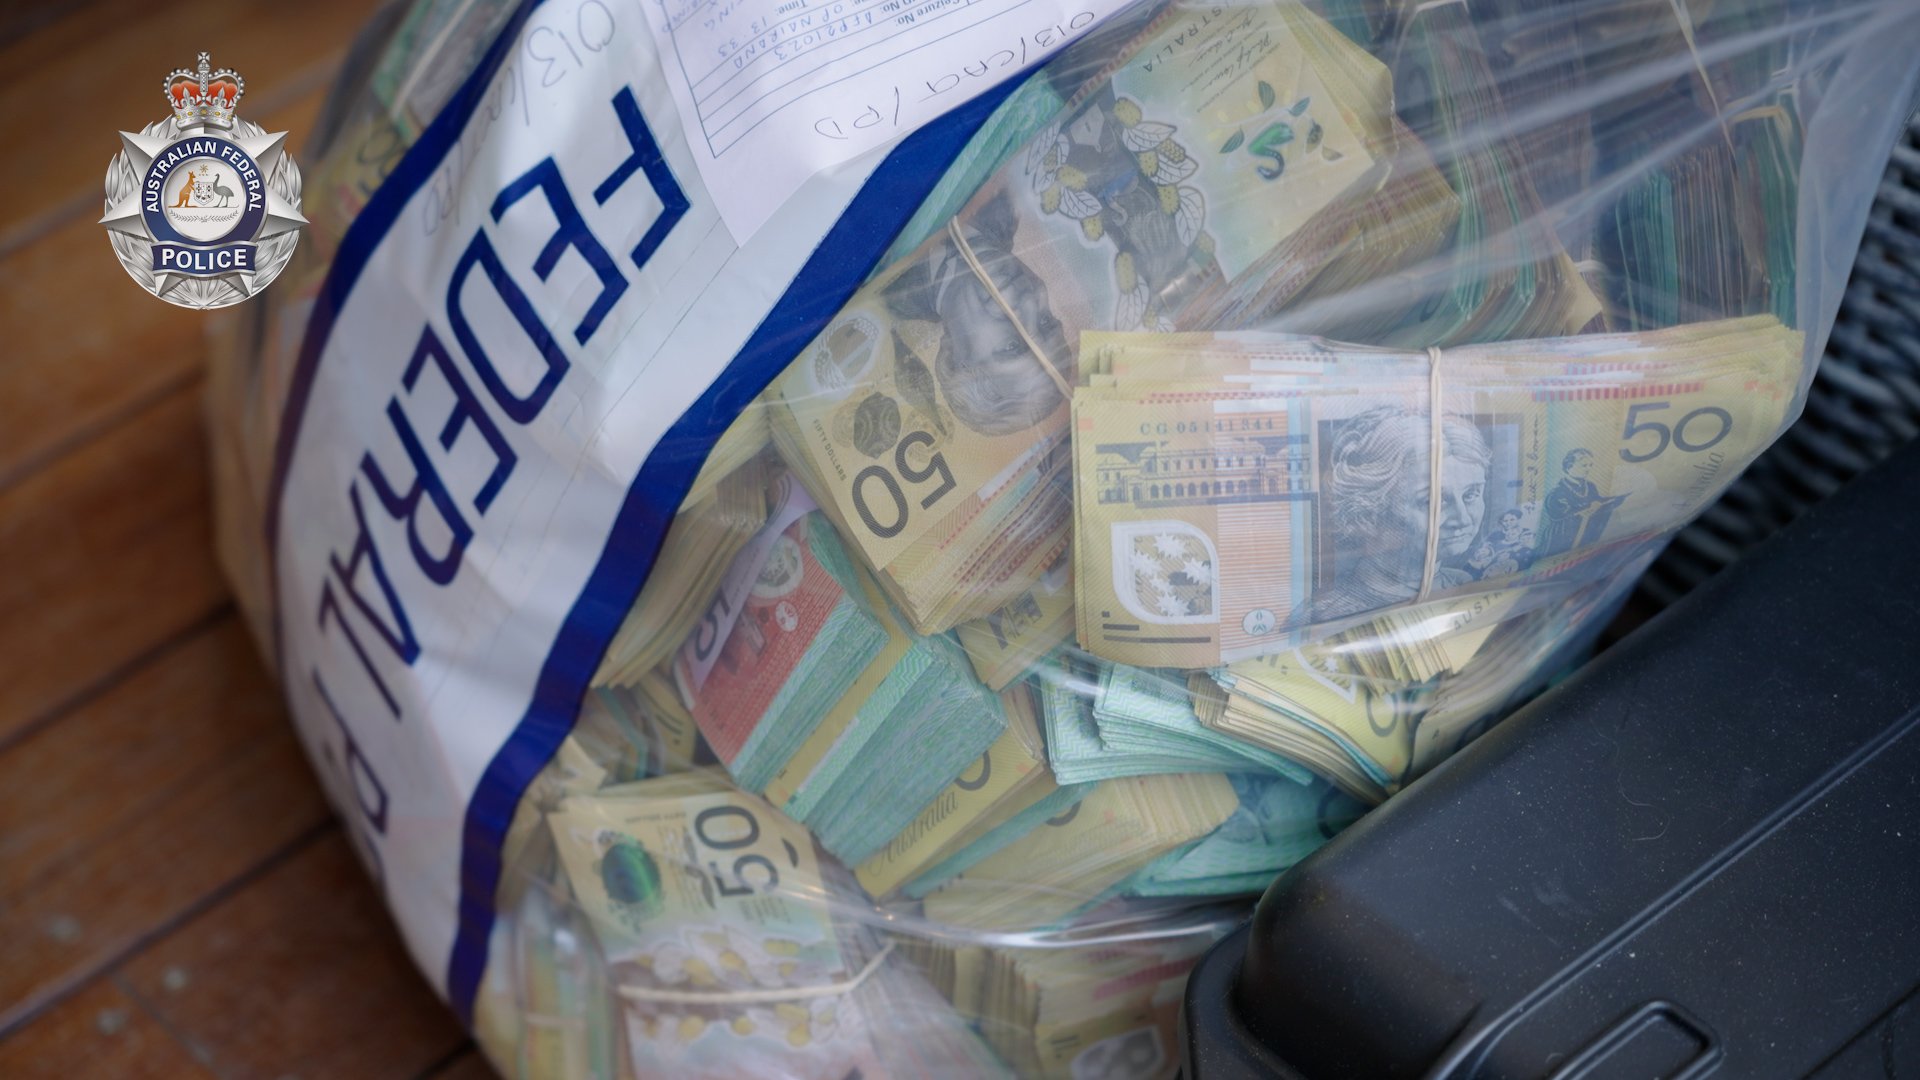 Bundled Australian bank notes in an AFP evidence bag